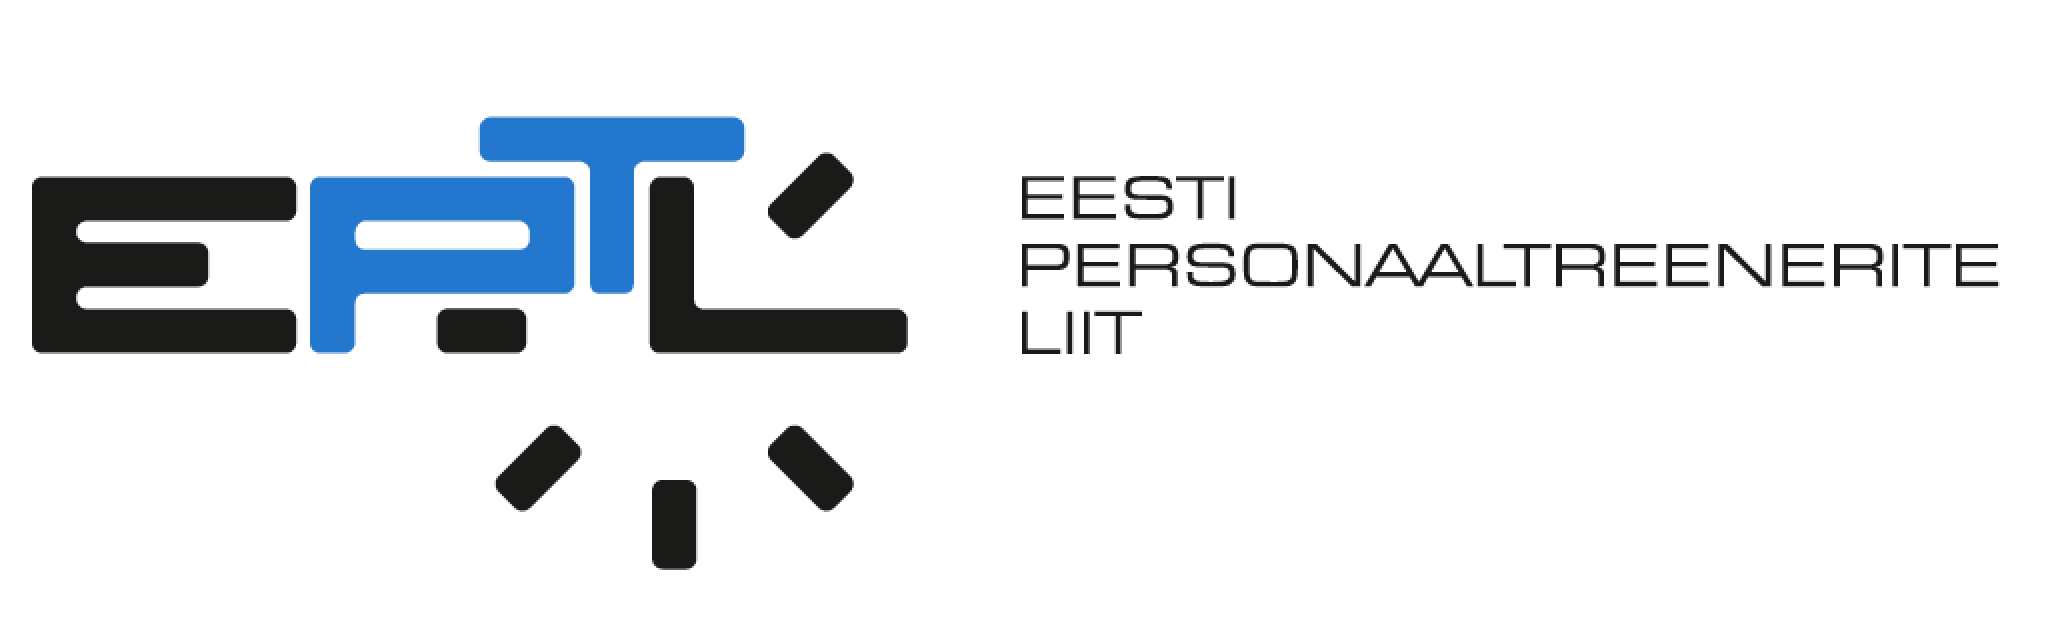 Eesti Personaaltreenerite Liit